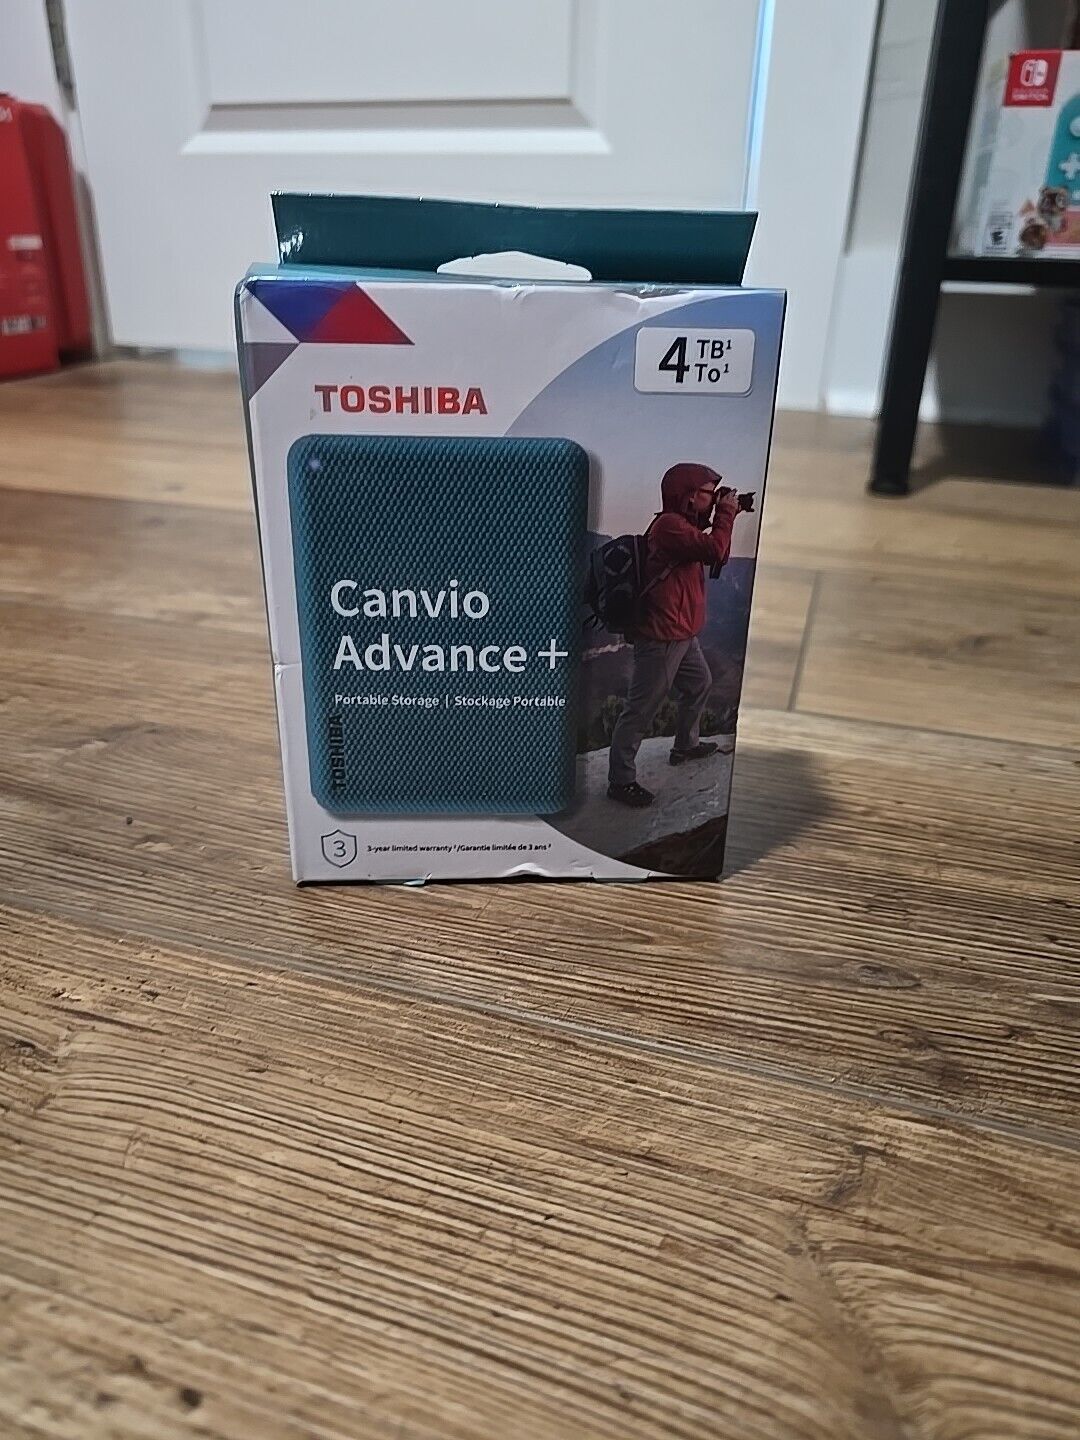 Toshiba Canvio Advance Plus 4 TB USB 3.0 External Hard Drive - New - FAST SHIP